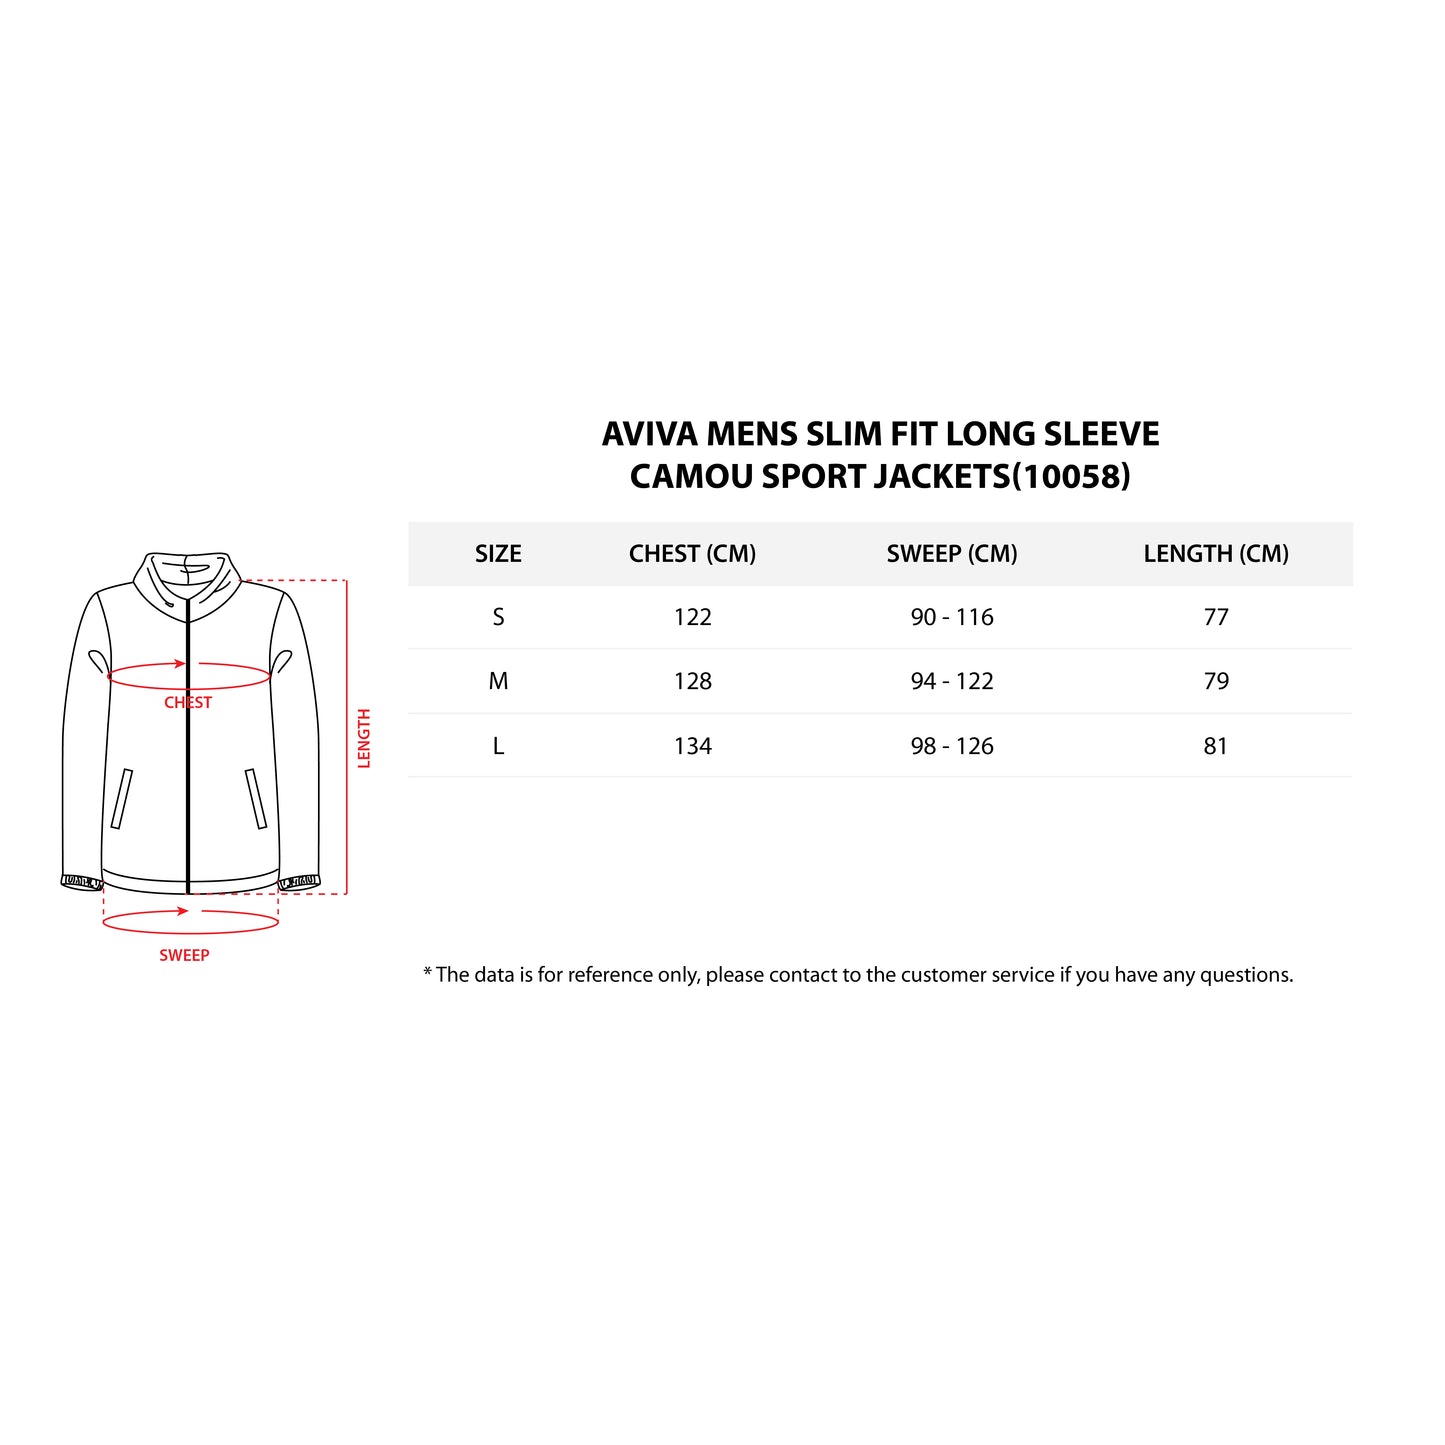 Aviva Men's Slim Fit Long Sleeve Camou Sport Jackets (91-10058)